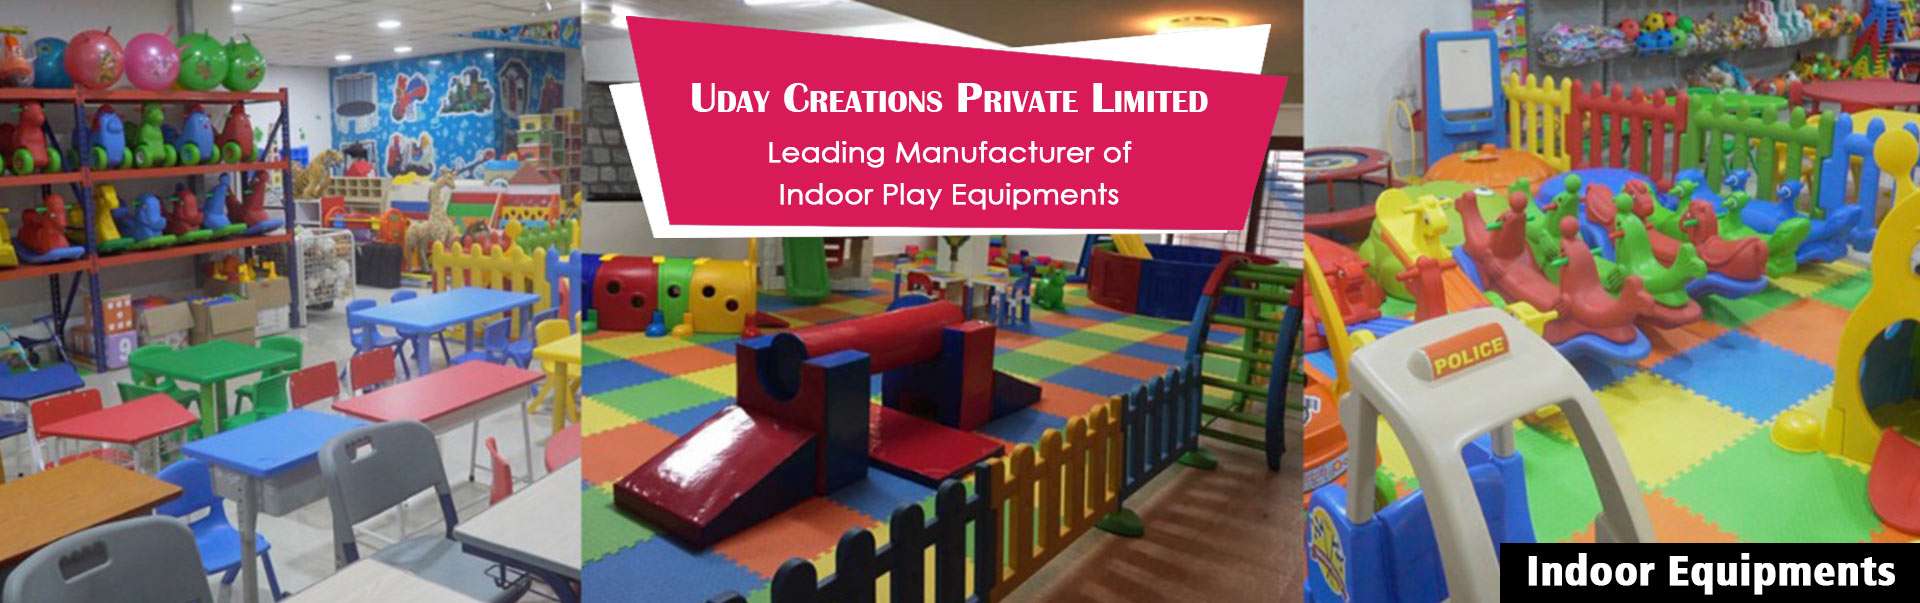  Uday Creations Pvt Ltd in Goa